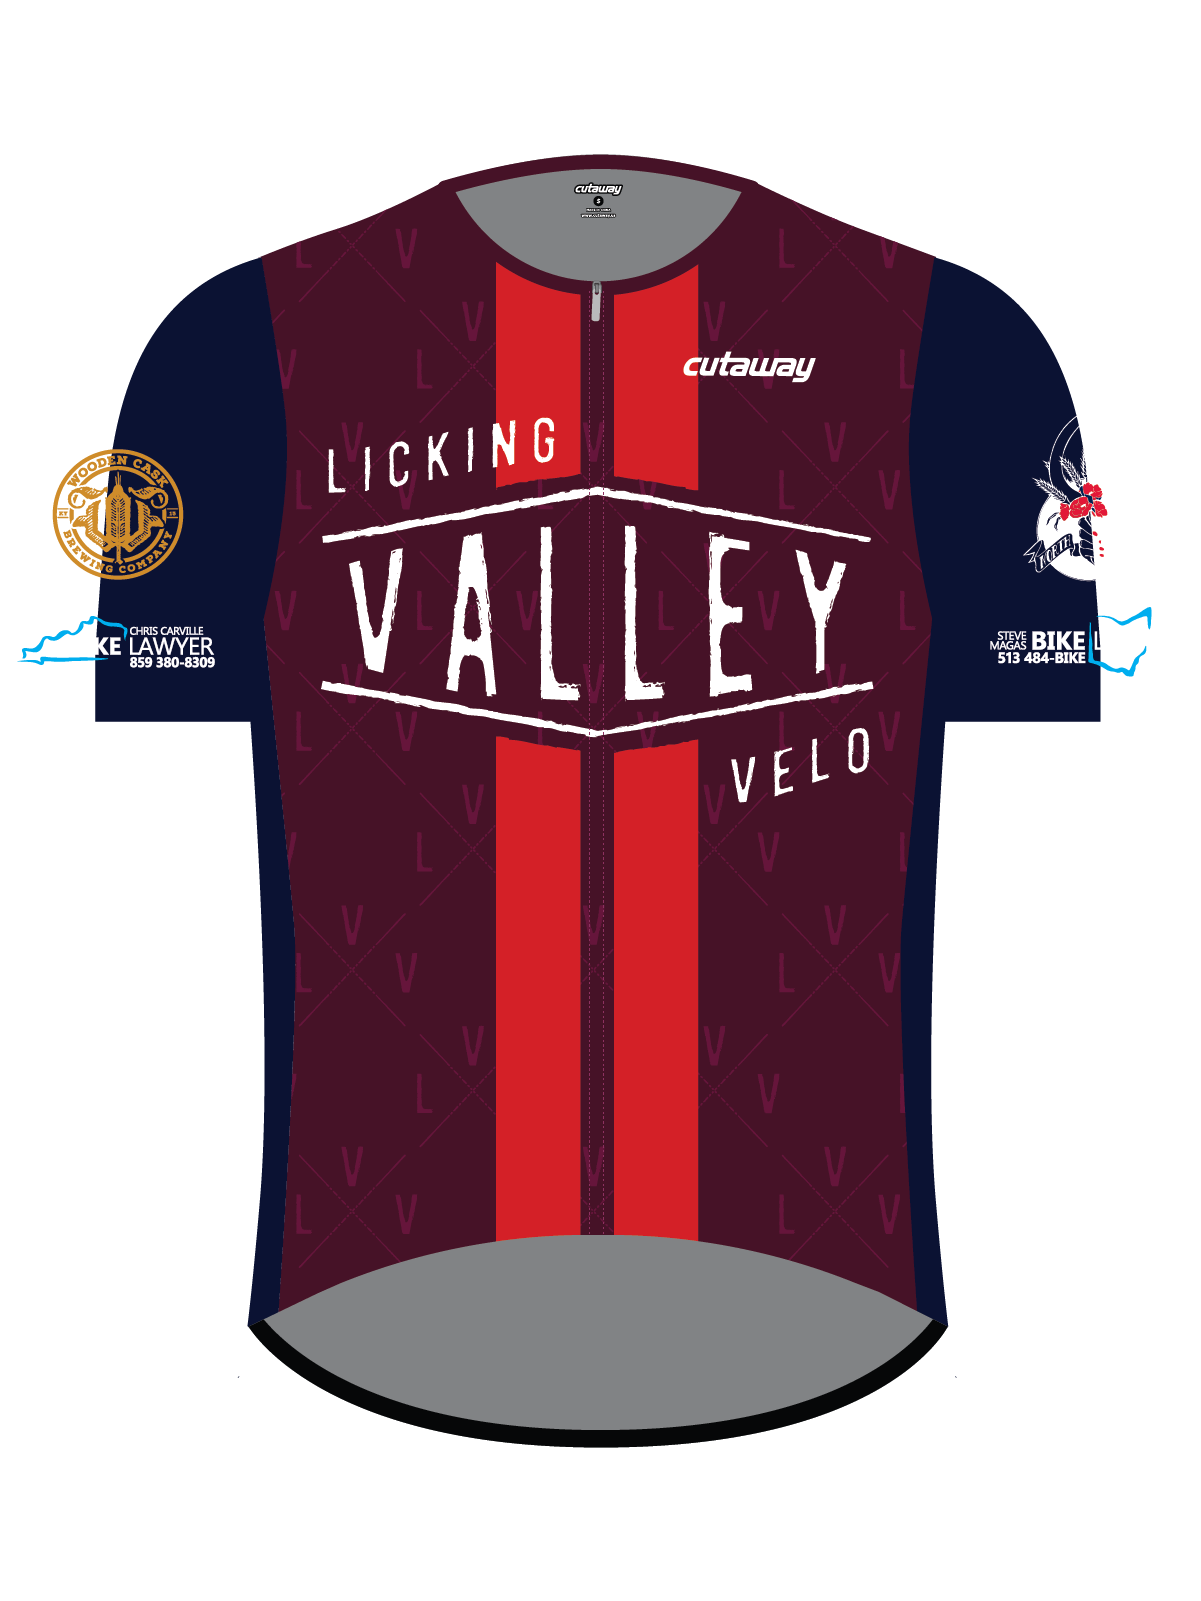 Licking Valley Velo Nova Essential Jersey